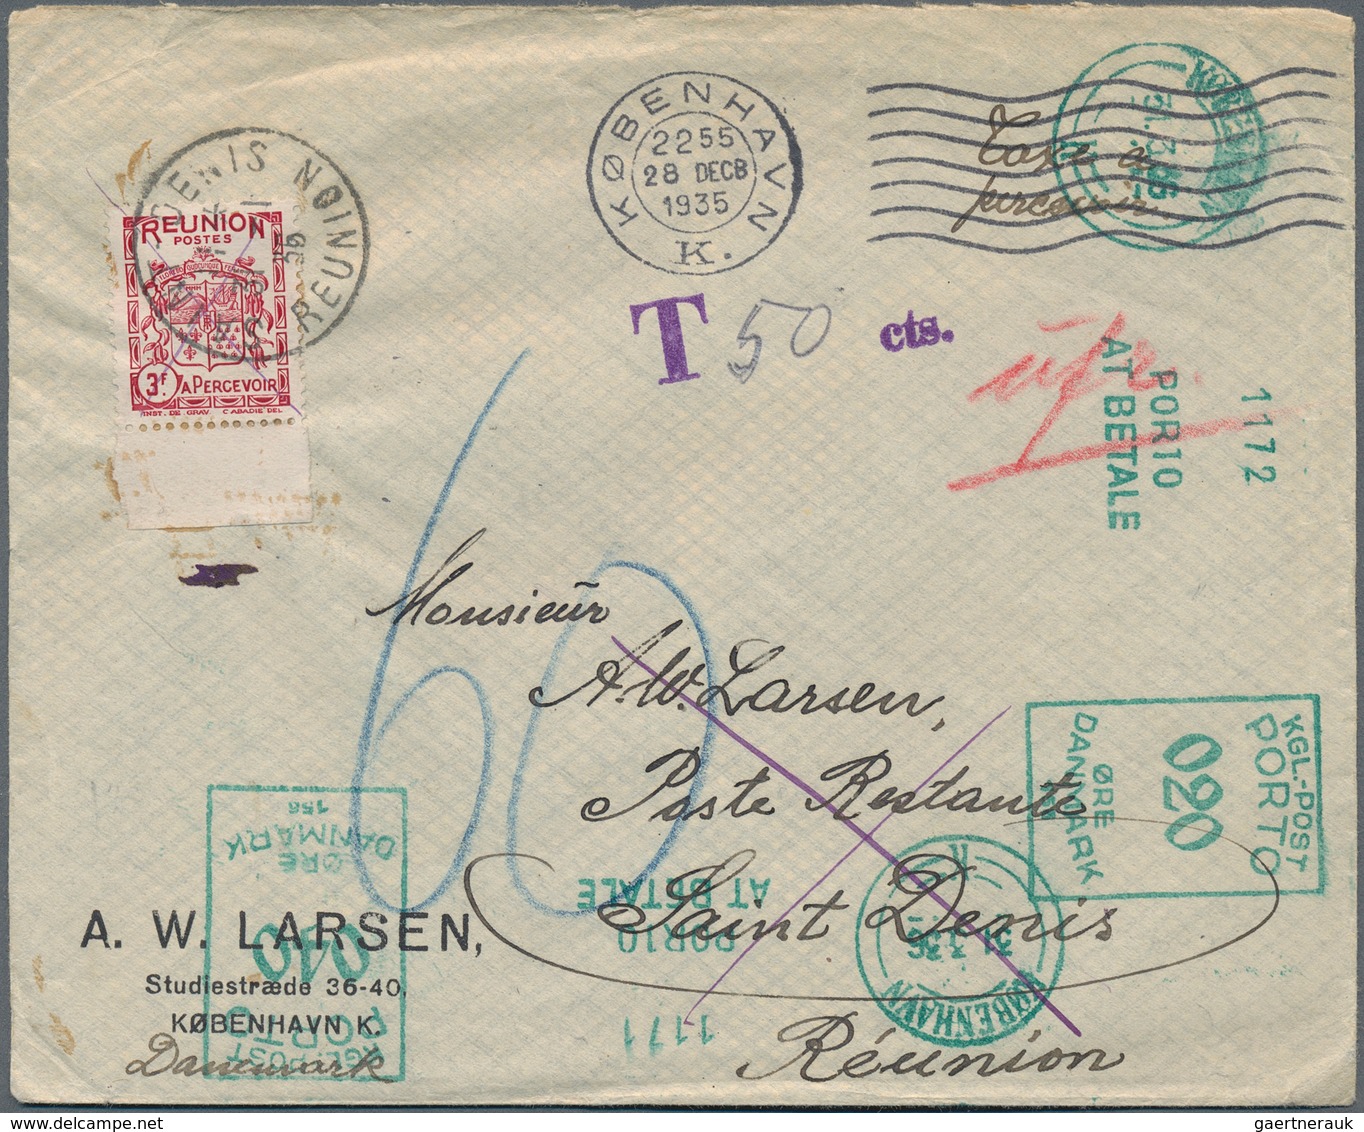 12382 Reunion - Portomarken: 1935, Denmark: Unpaid Cover From KOBENHAVN, 28.12.1935, With Manuscript Note - Portomarken